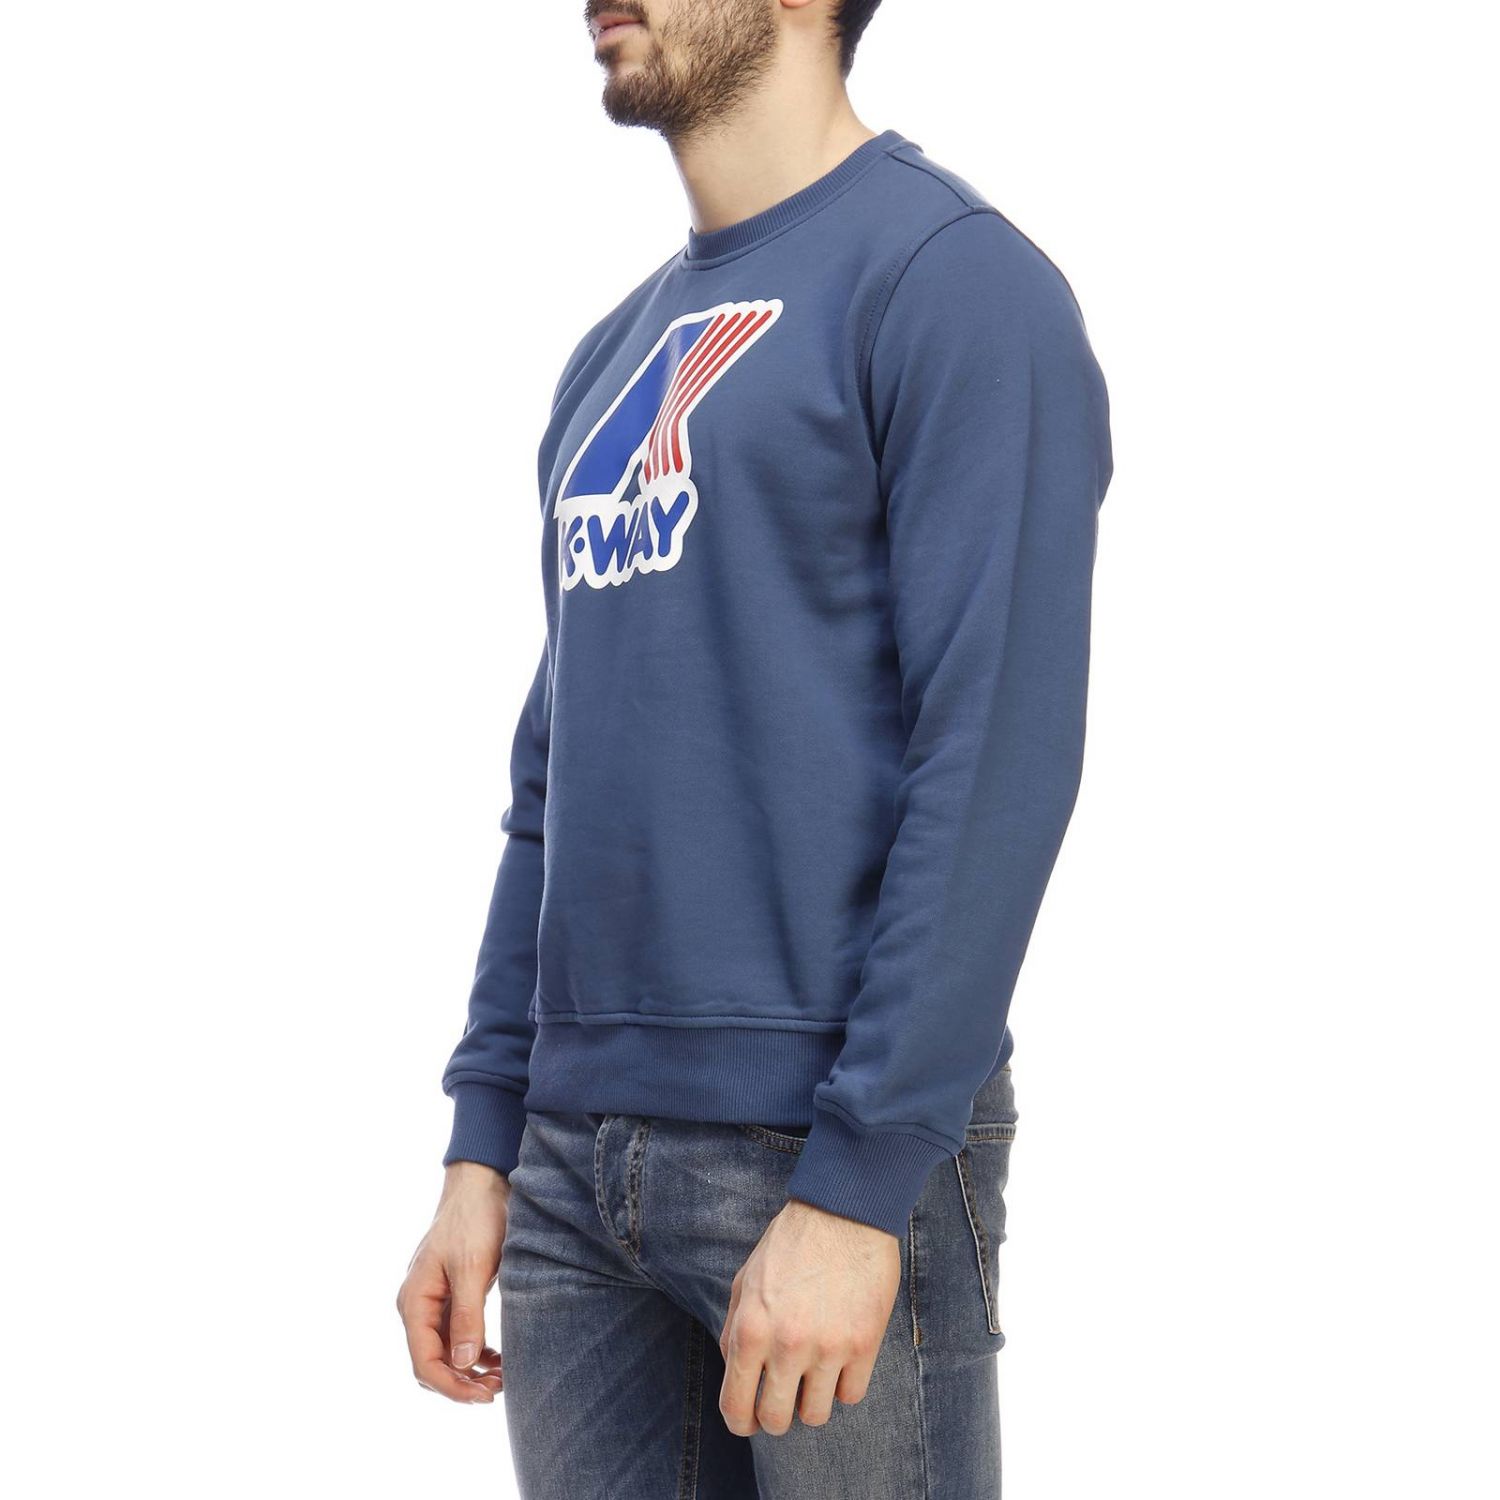 K-Way Outlet: Sweatshirt man - Teal | K-Way Sweatshirt K009G10 online ...